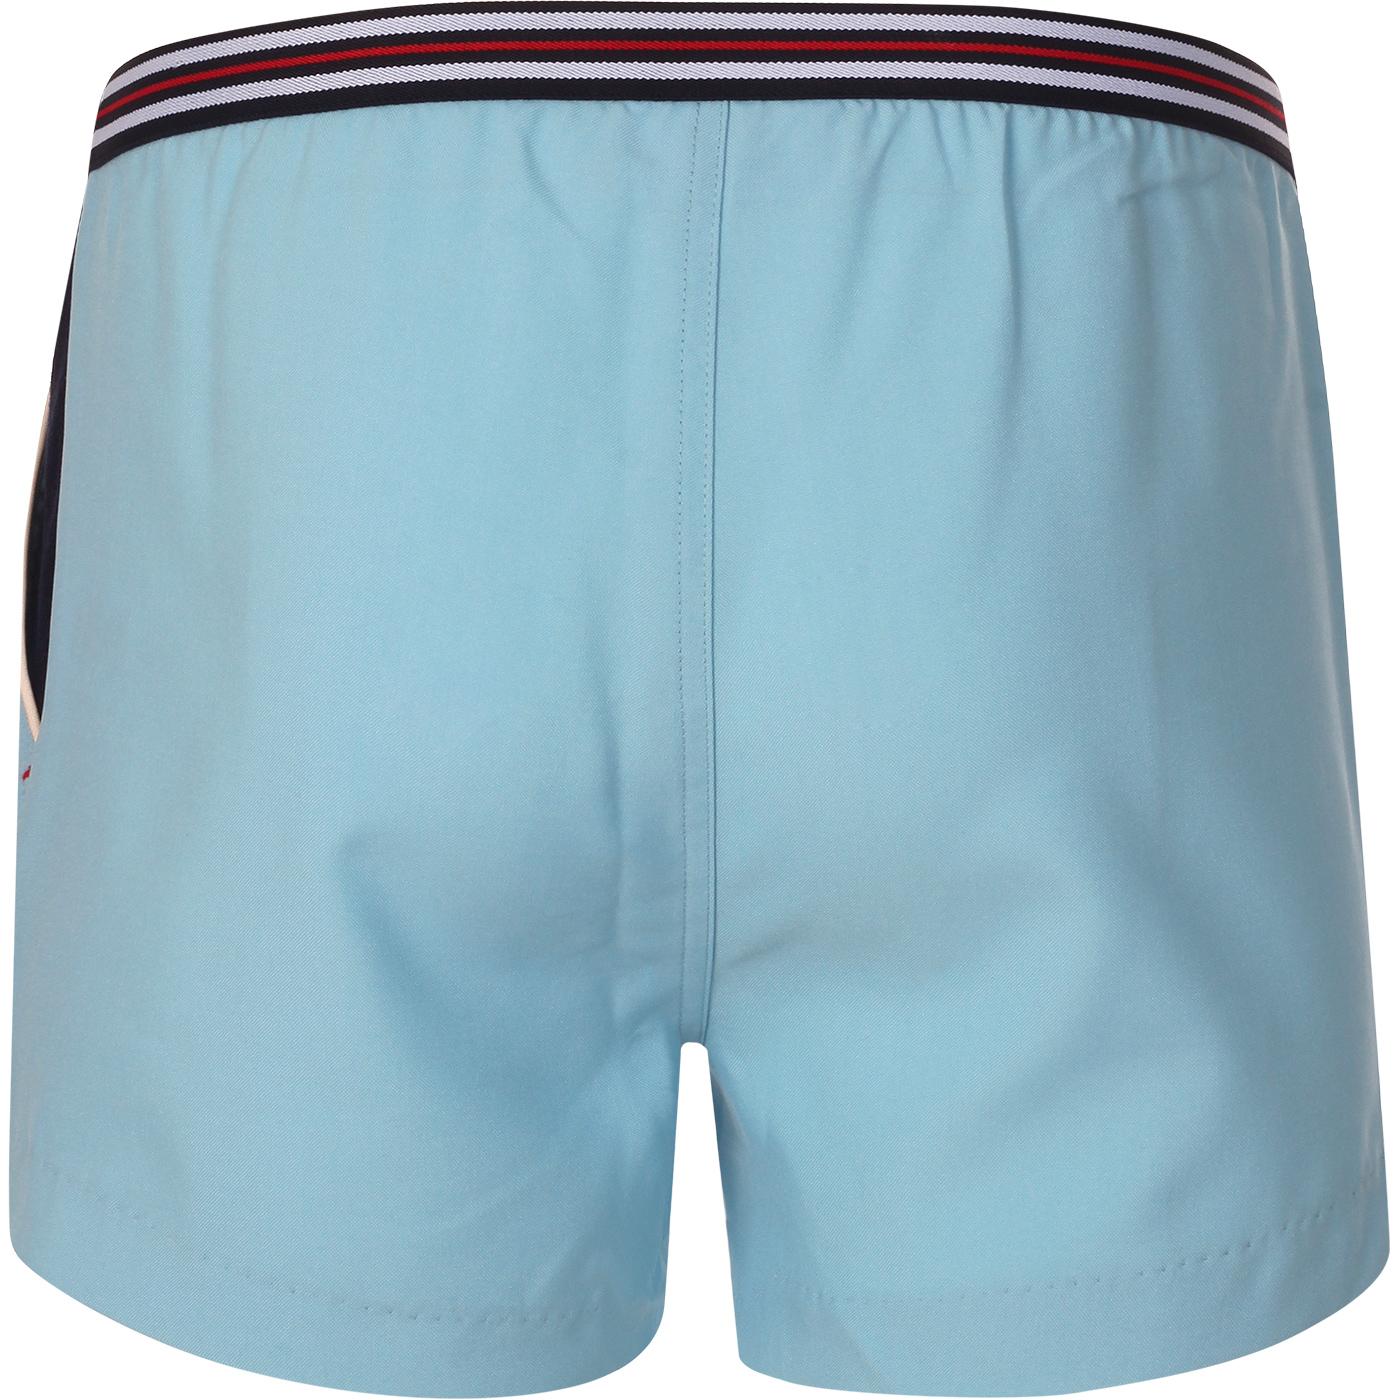 Fila Vintage Hightide Terry Pocket Stripe Shorts, 40% OFF